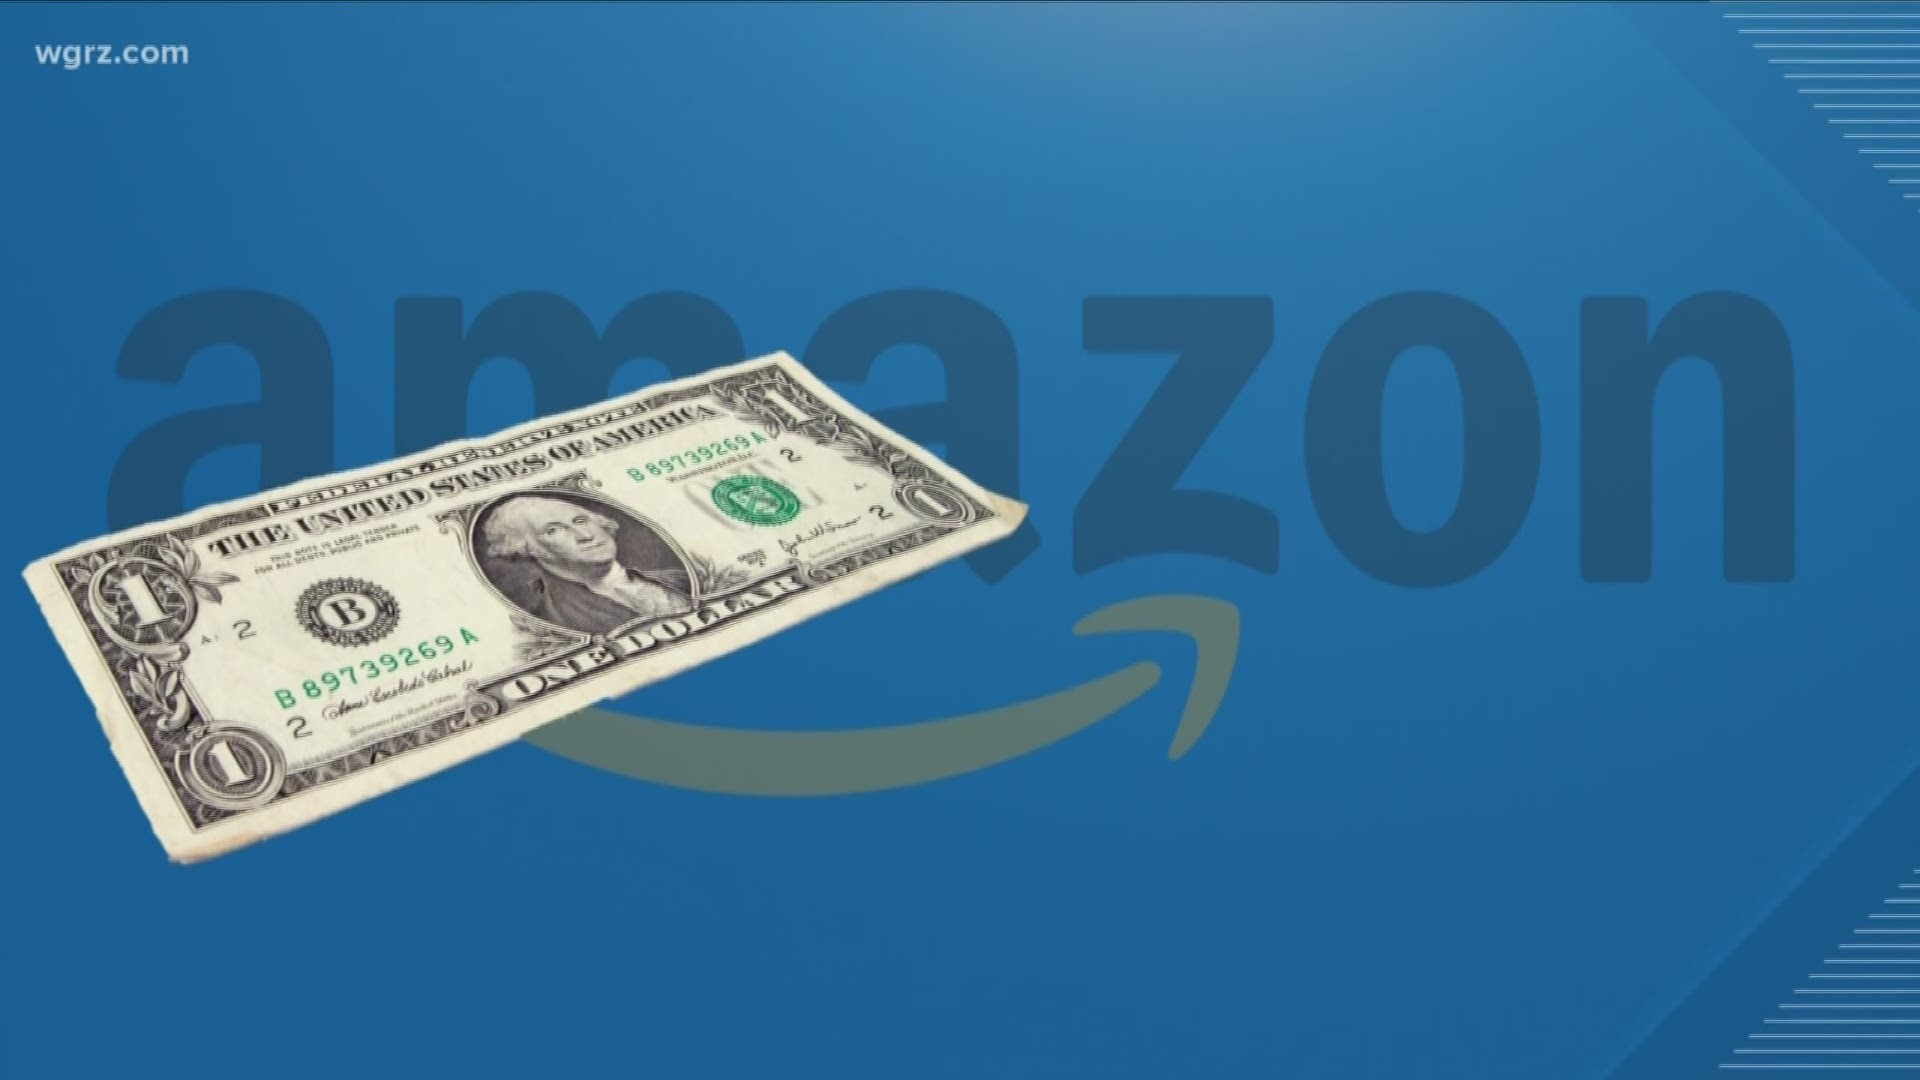 VERIFY: Does New York's Amazon math add up?